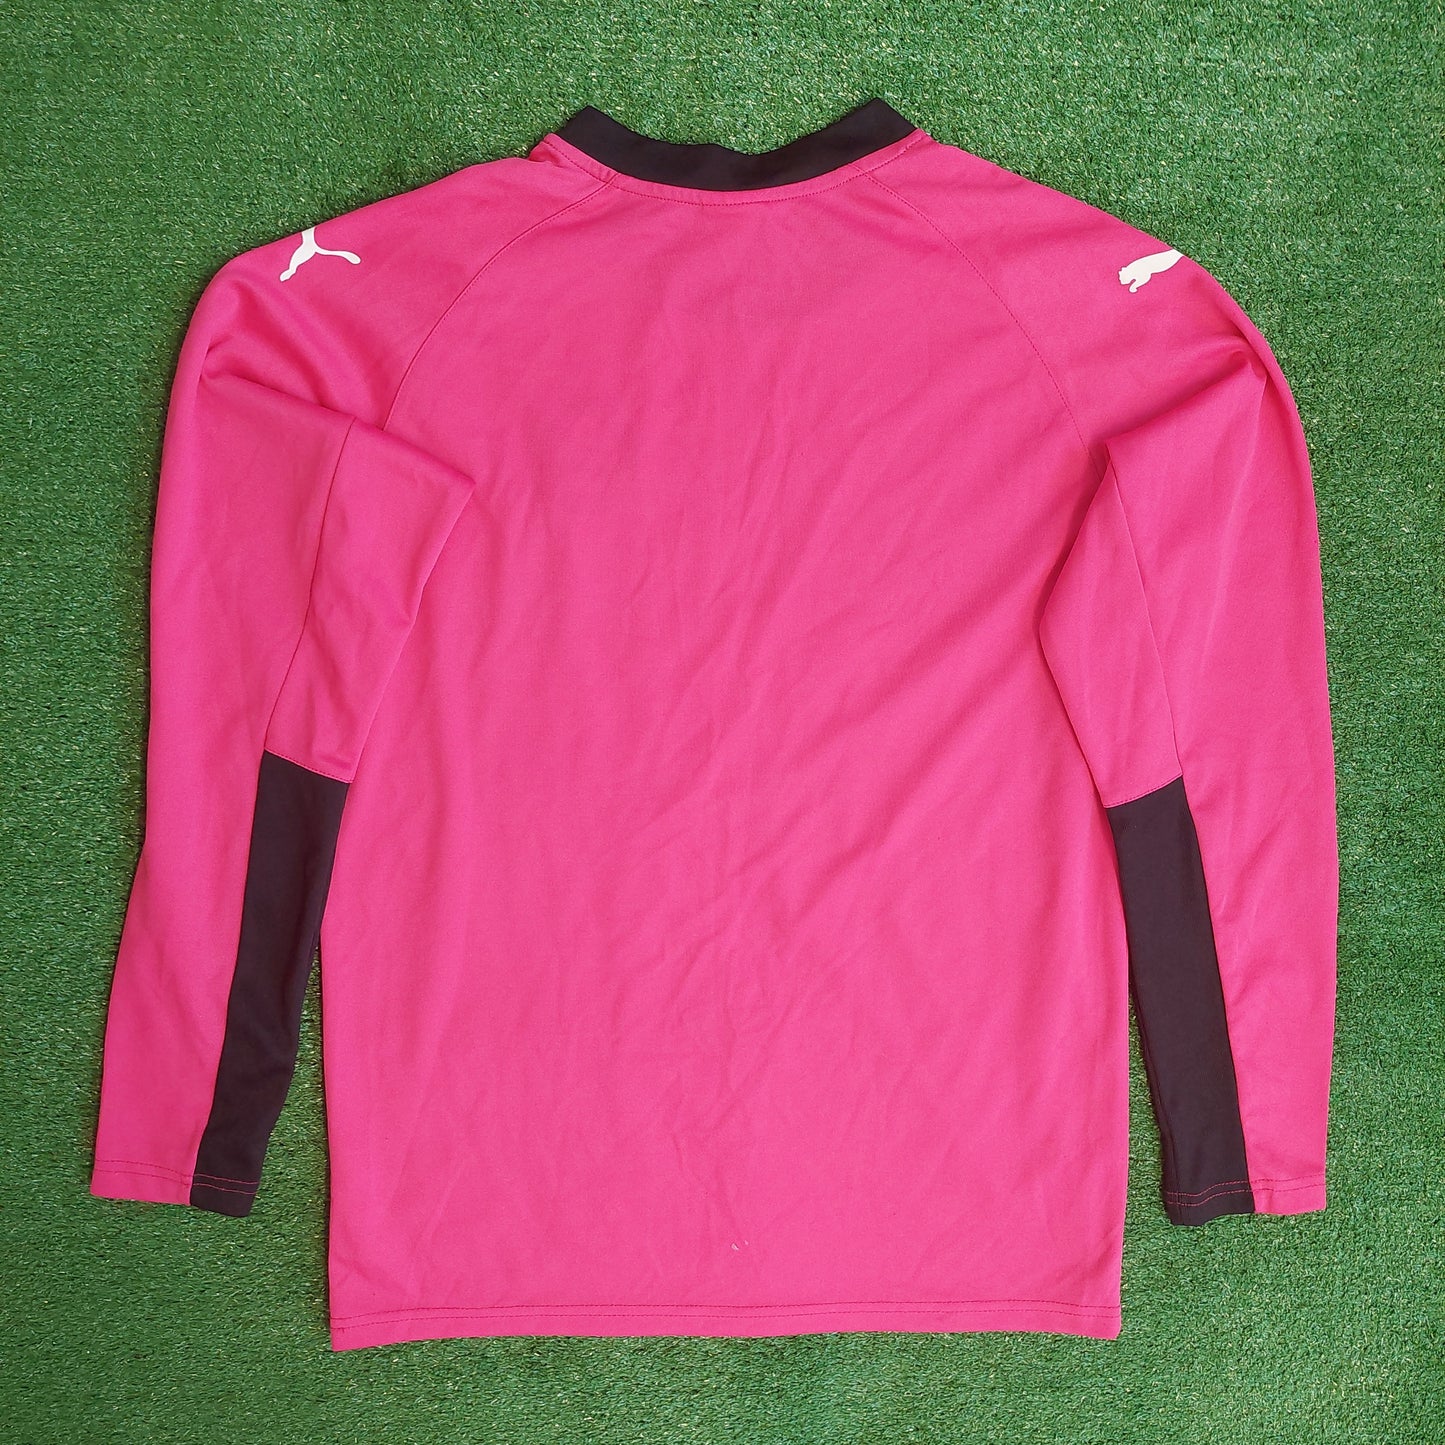 Reading 2014/15 Goalkeeper Shirt (Very Good) - Size M